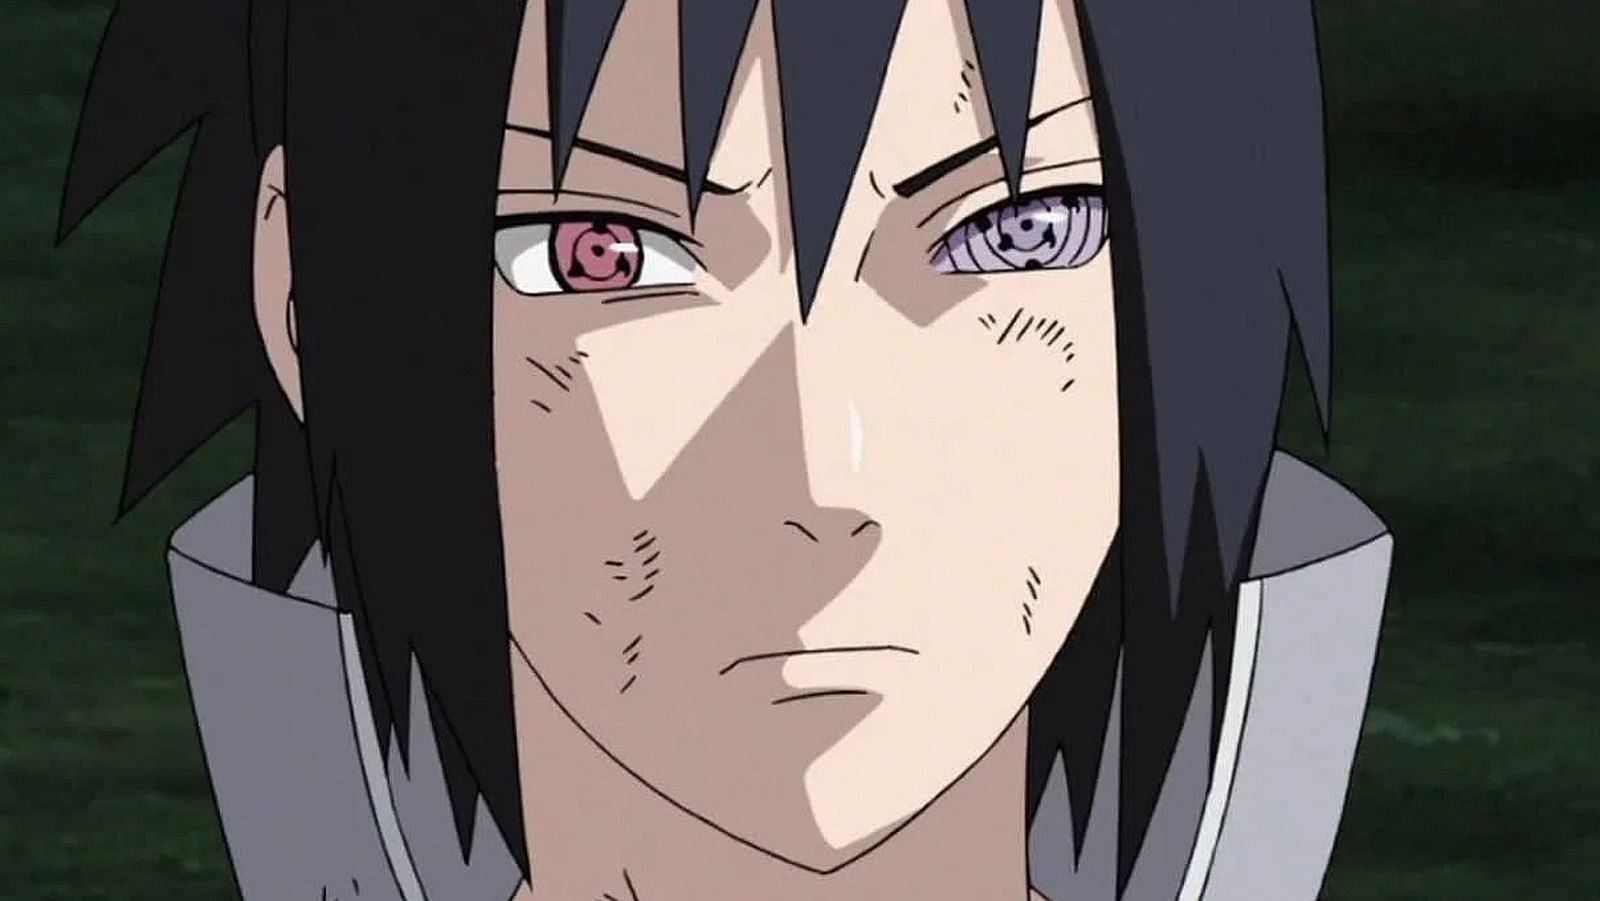 Sasuke Uchiha as seen in the Naruto anime (Image via Studio Pierrot)